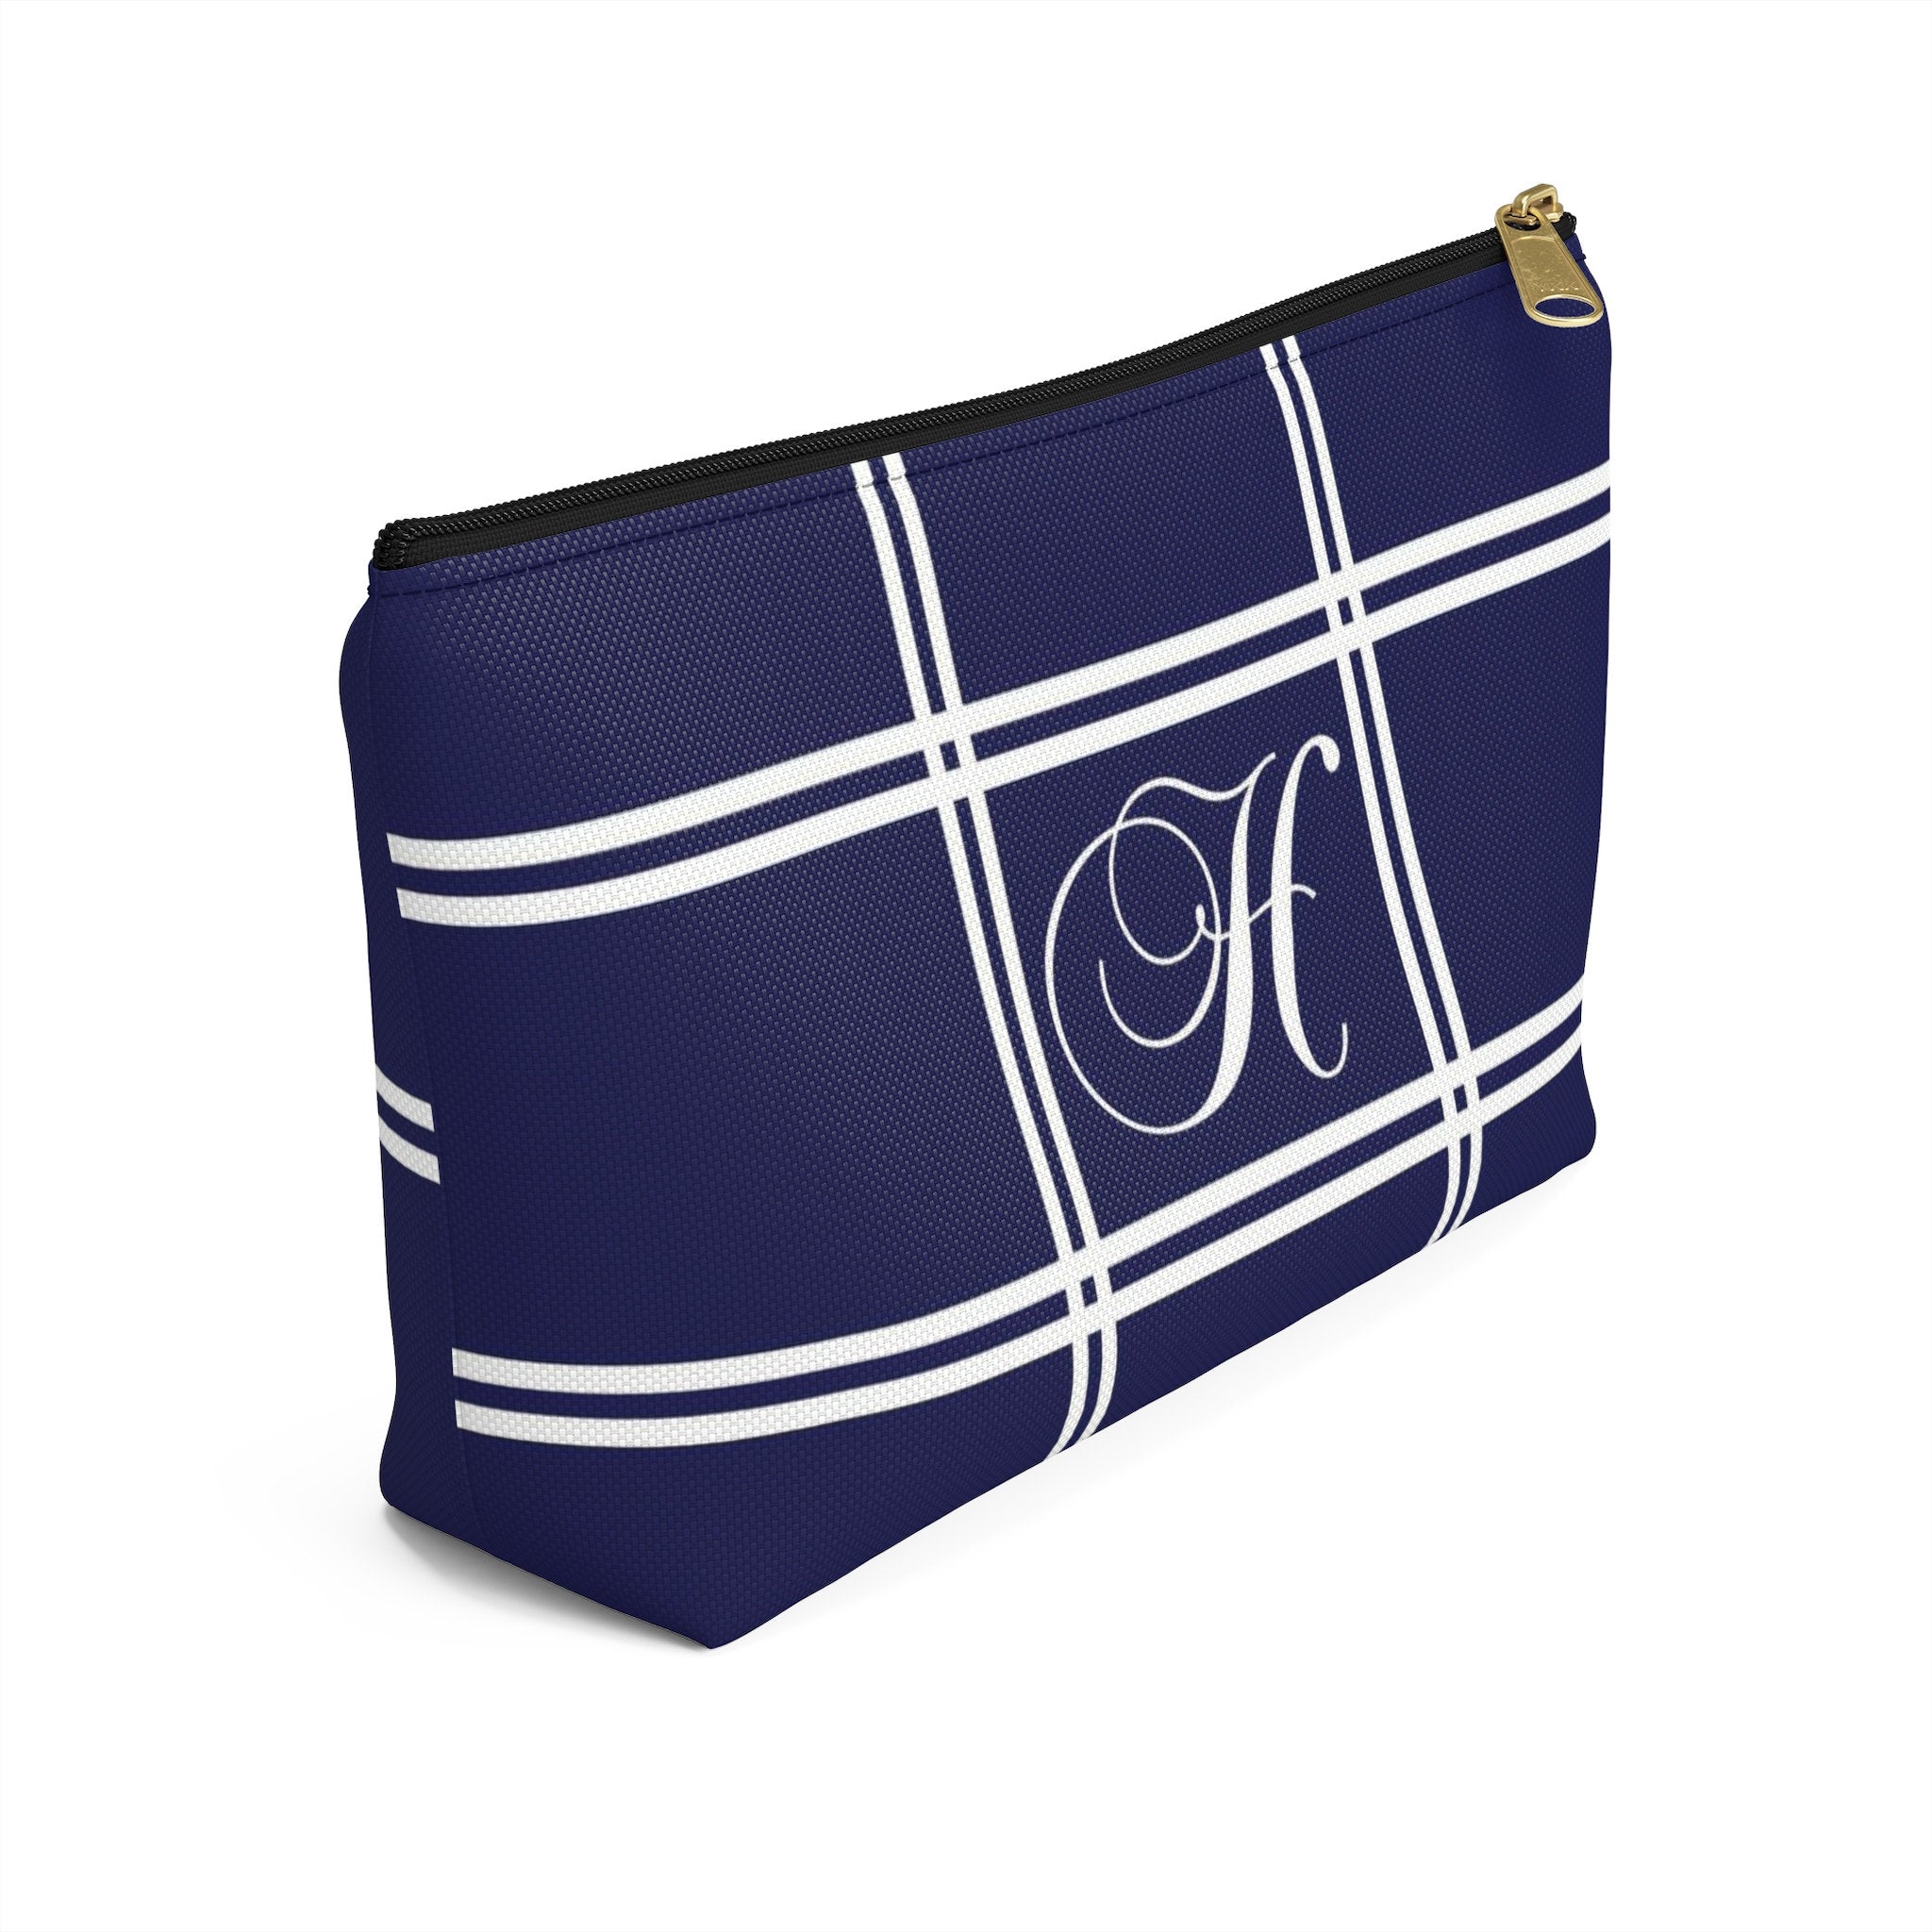 Monogram Makeup or Toiletry Bag - Blue & White Block Stripes -PH19